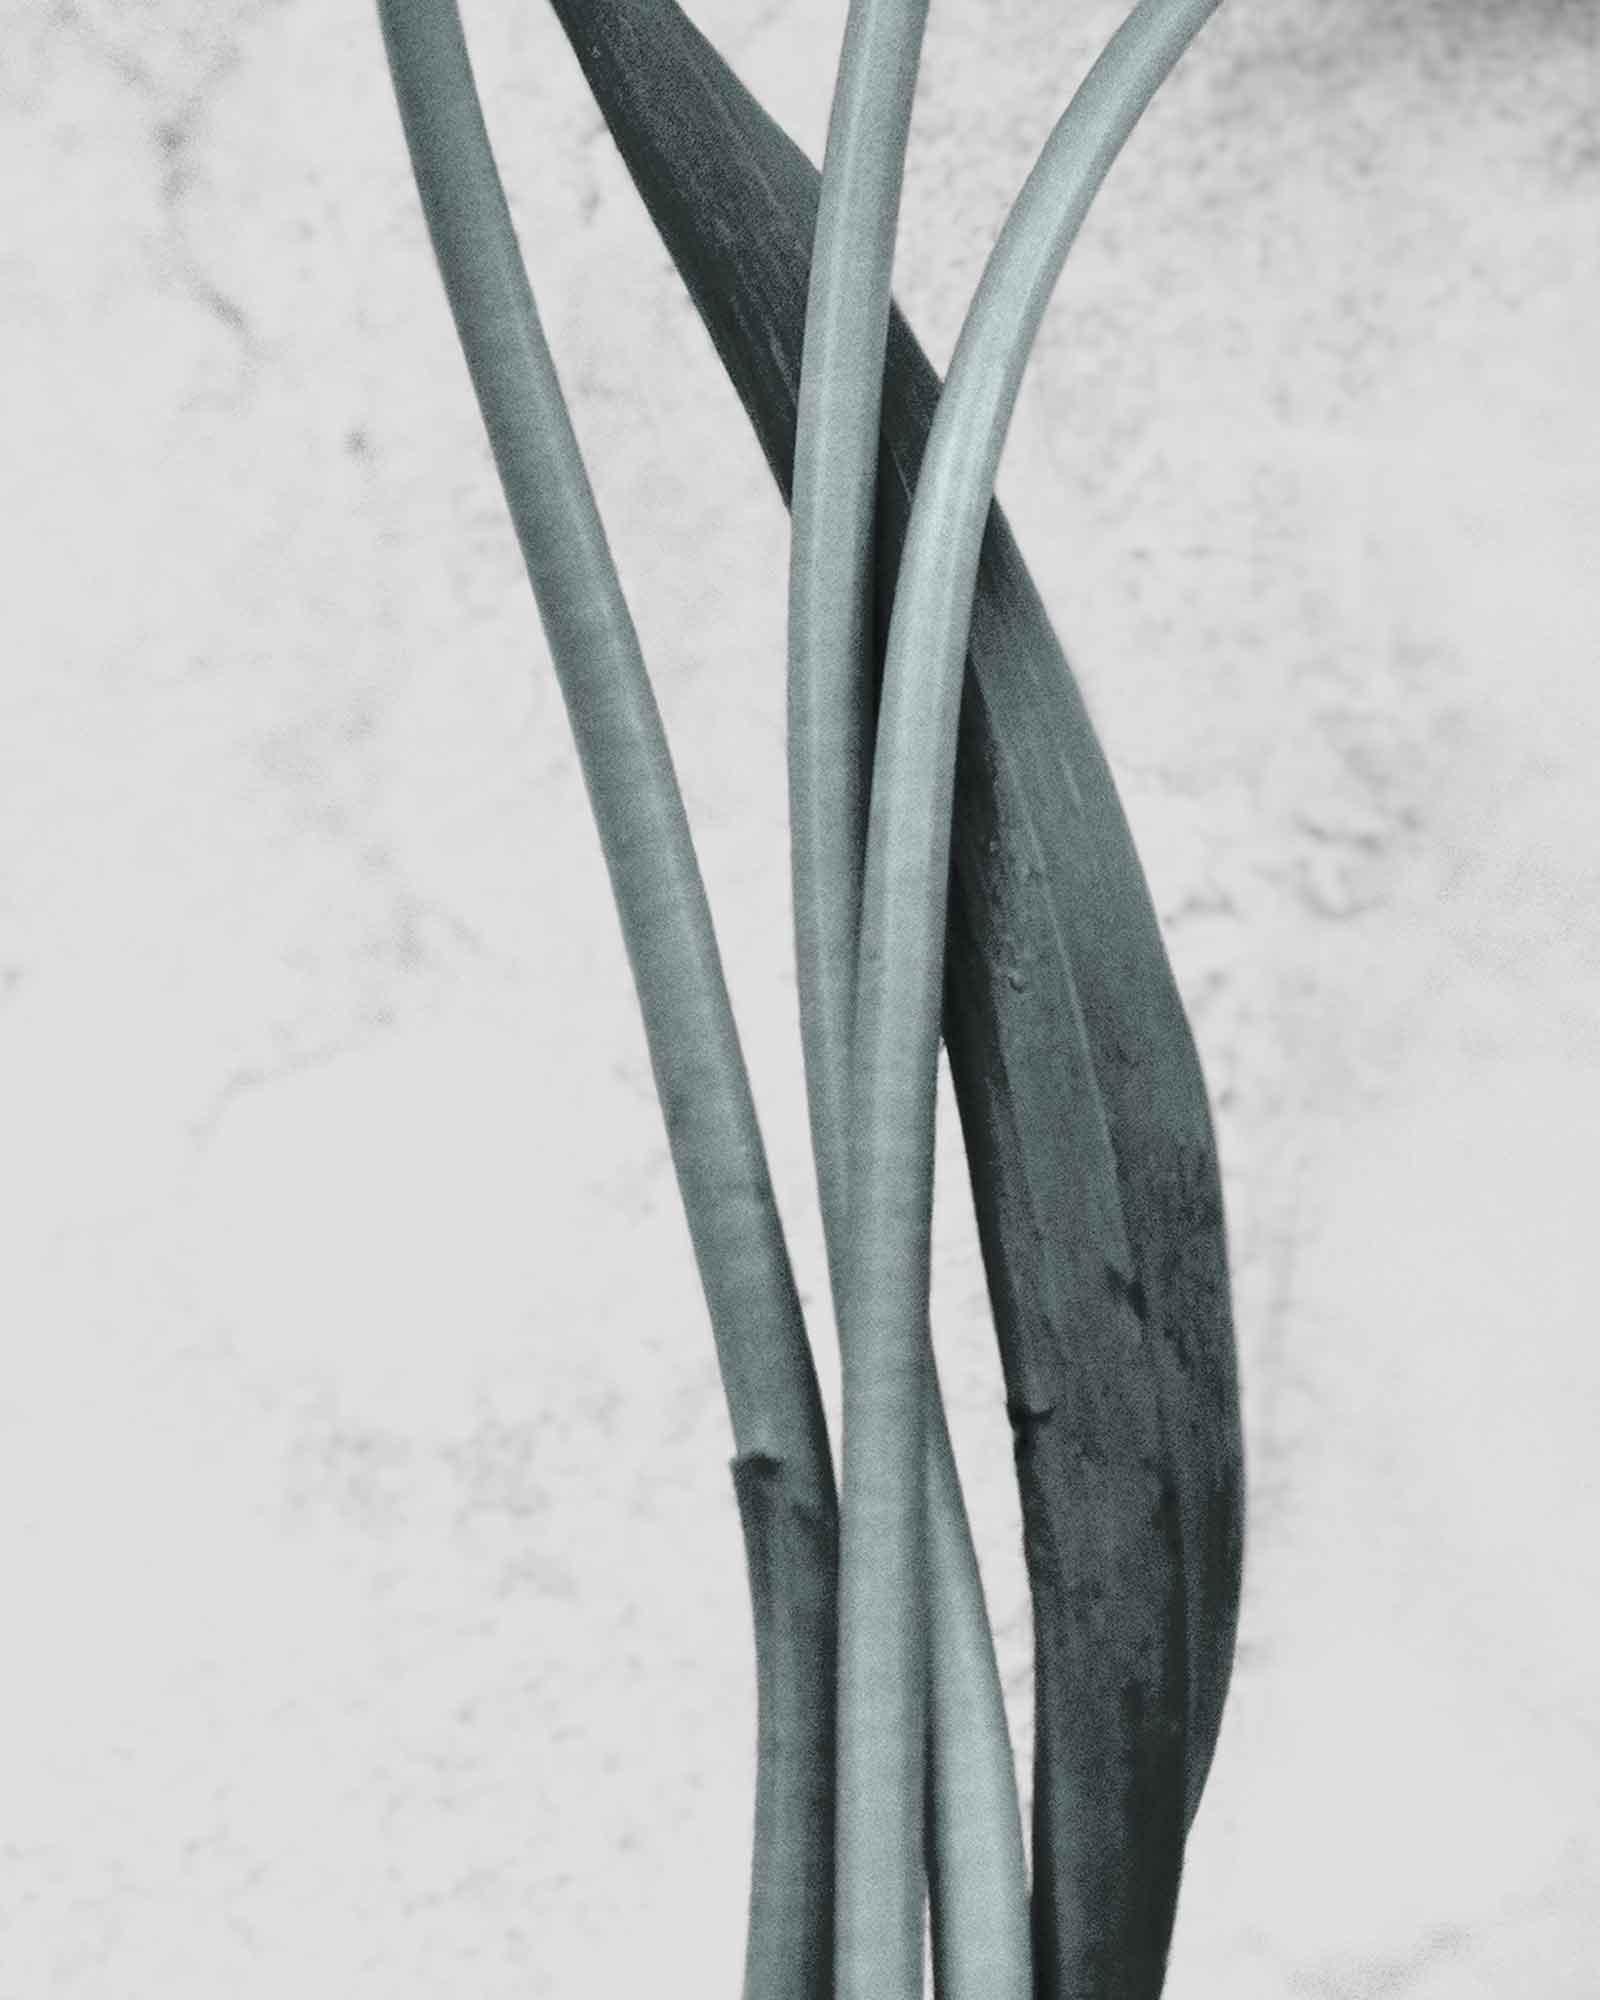 Botanica #12 (Tulipa Gesneriana) - Contemporary Photograph by Vee Speers